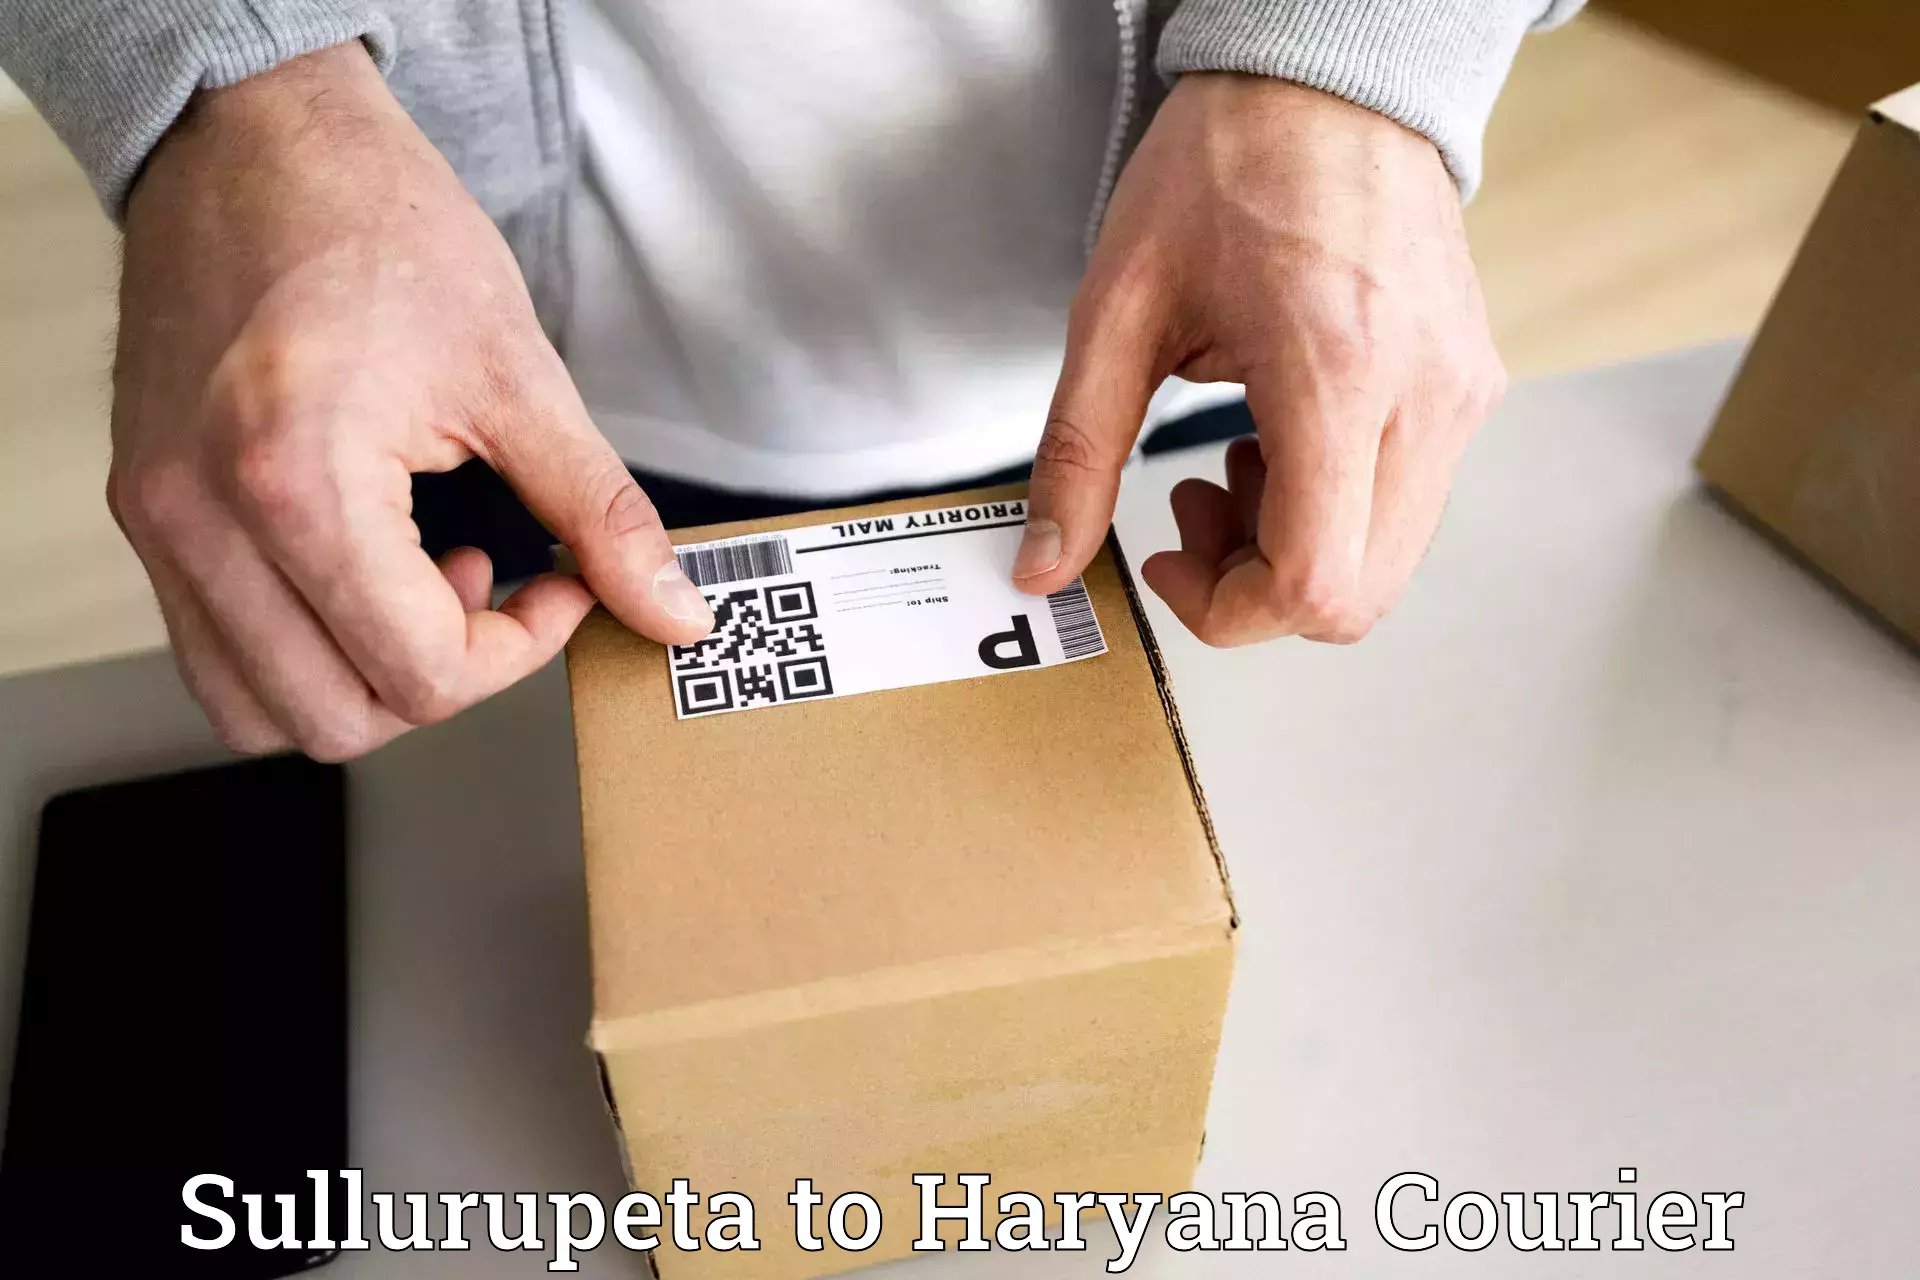 Courier service efficiency Sullurupeta to Chirya